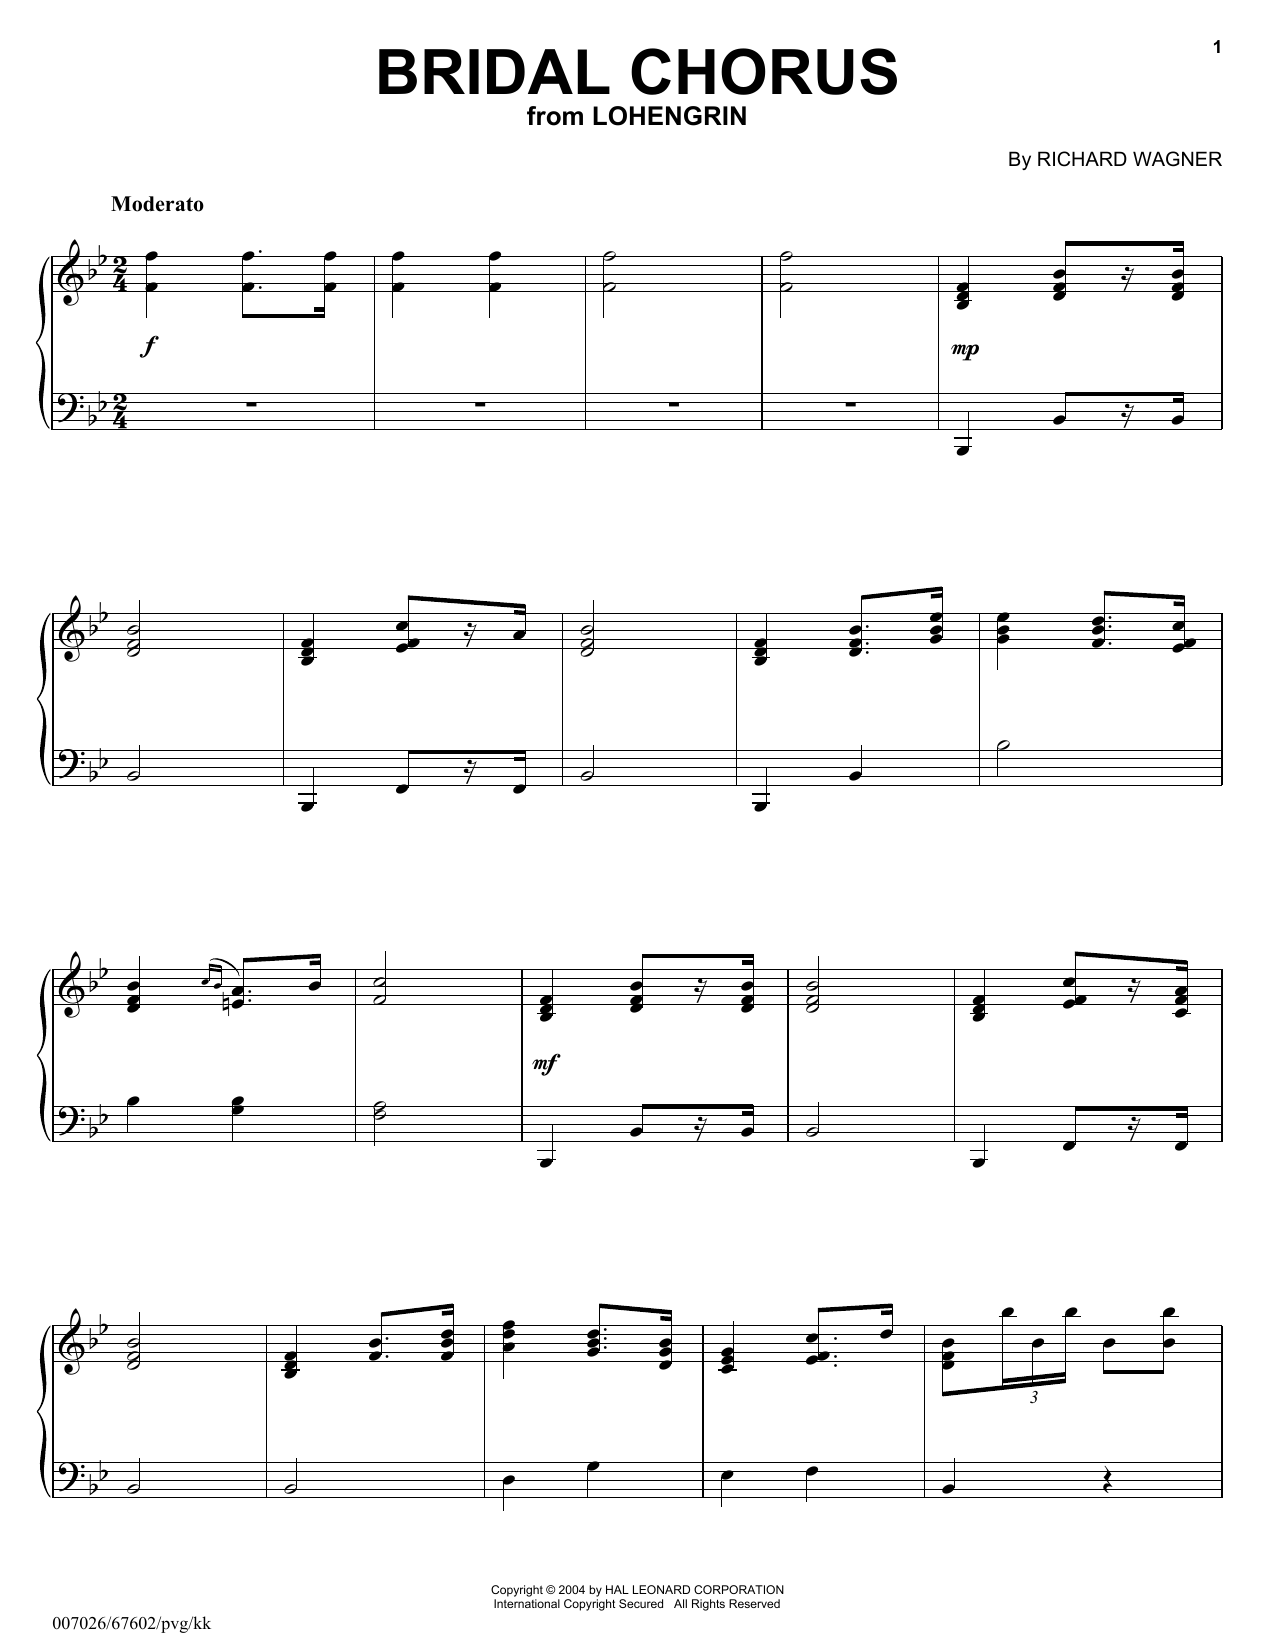 Richard Wagner Bridal Chorus Sheet Music Notes & Chords for Alto Saxophone - Download or Print PDF